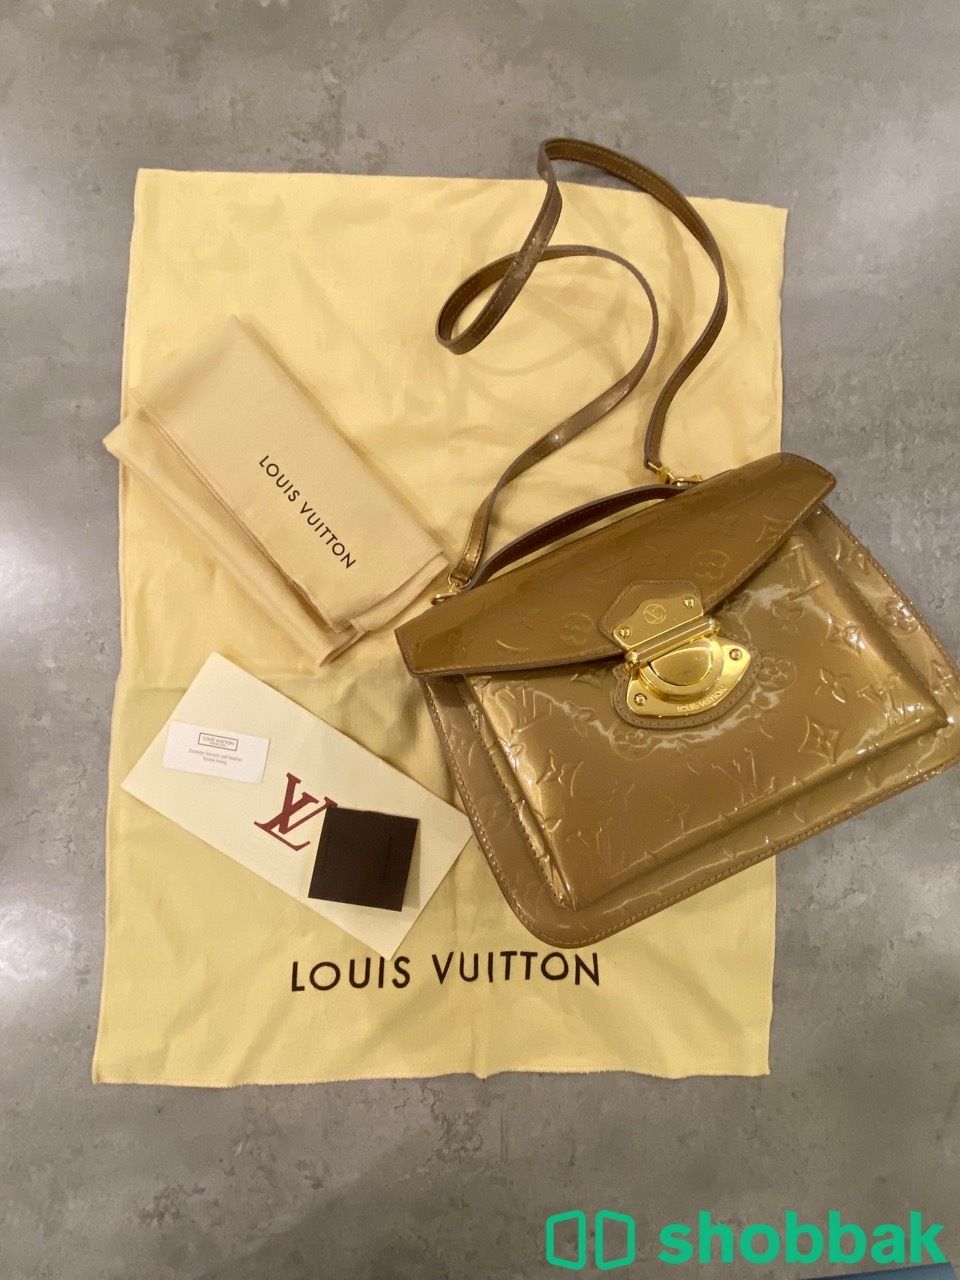 LV - Louis Vuitton Bag - شنطة لويس فيتون Shobbak Saudi Arabia